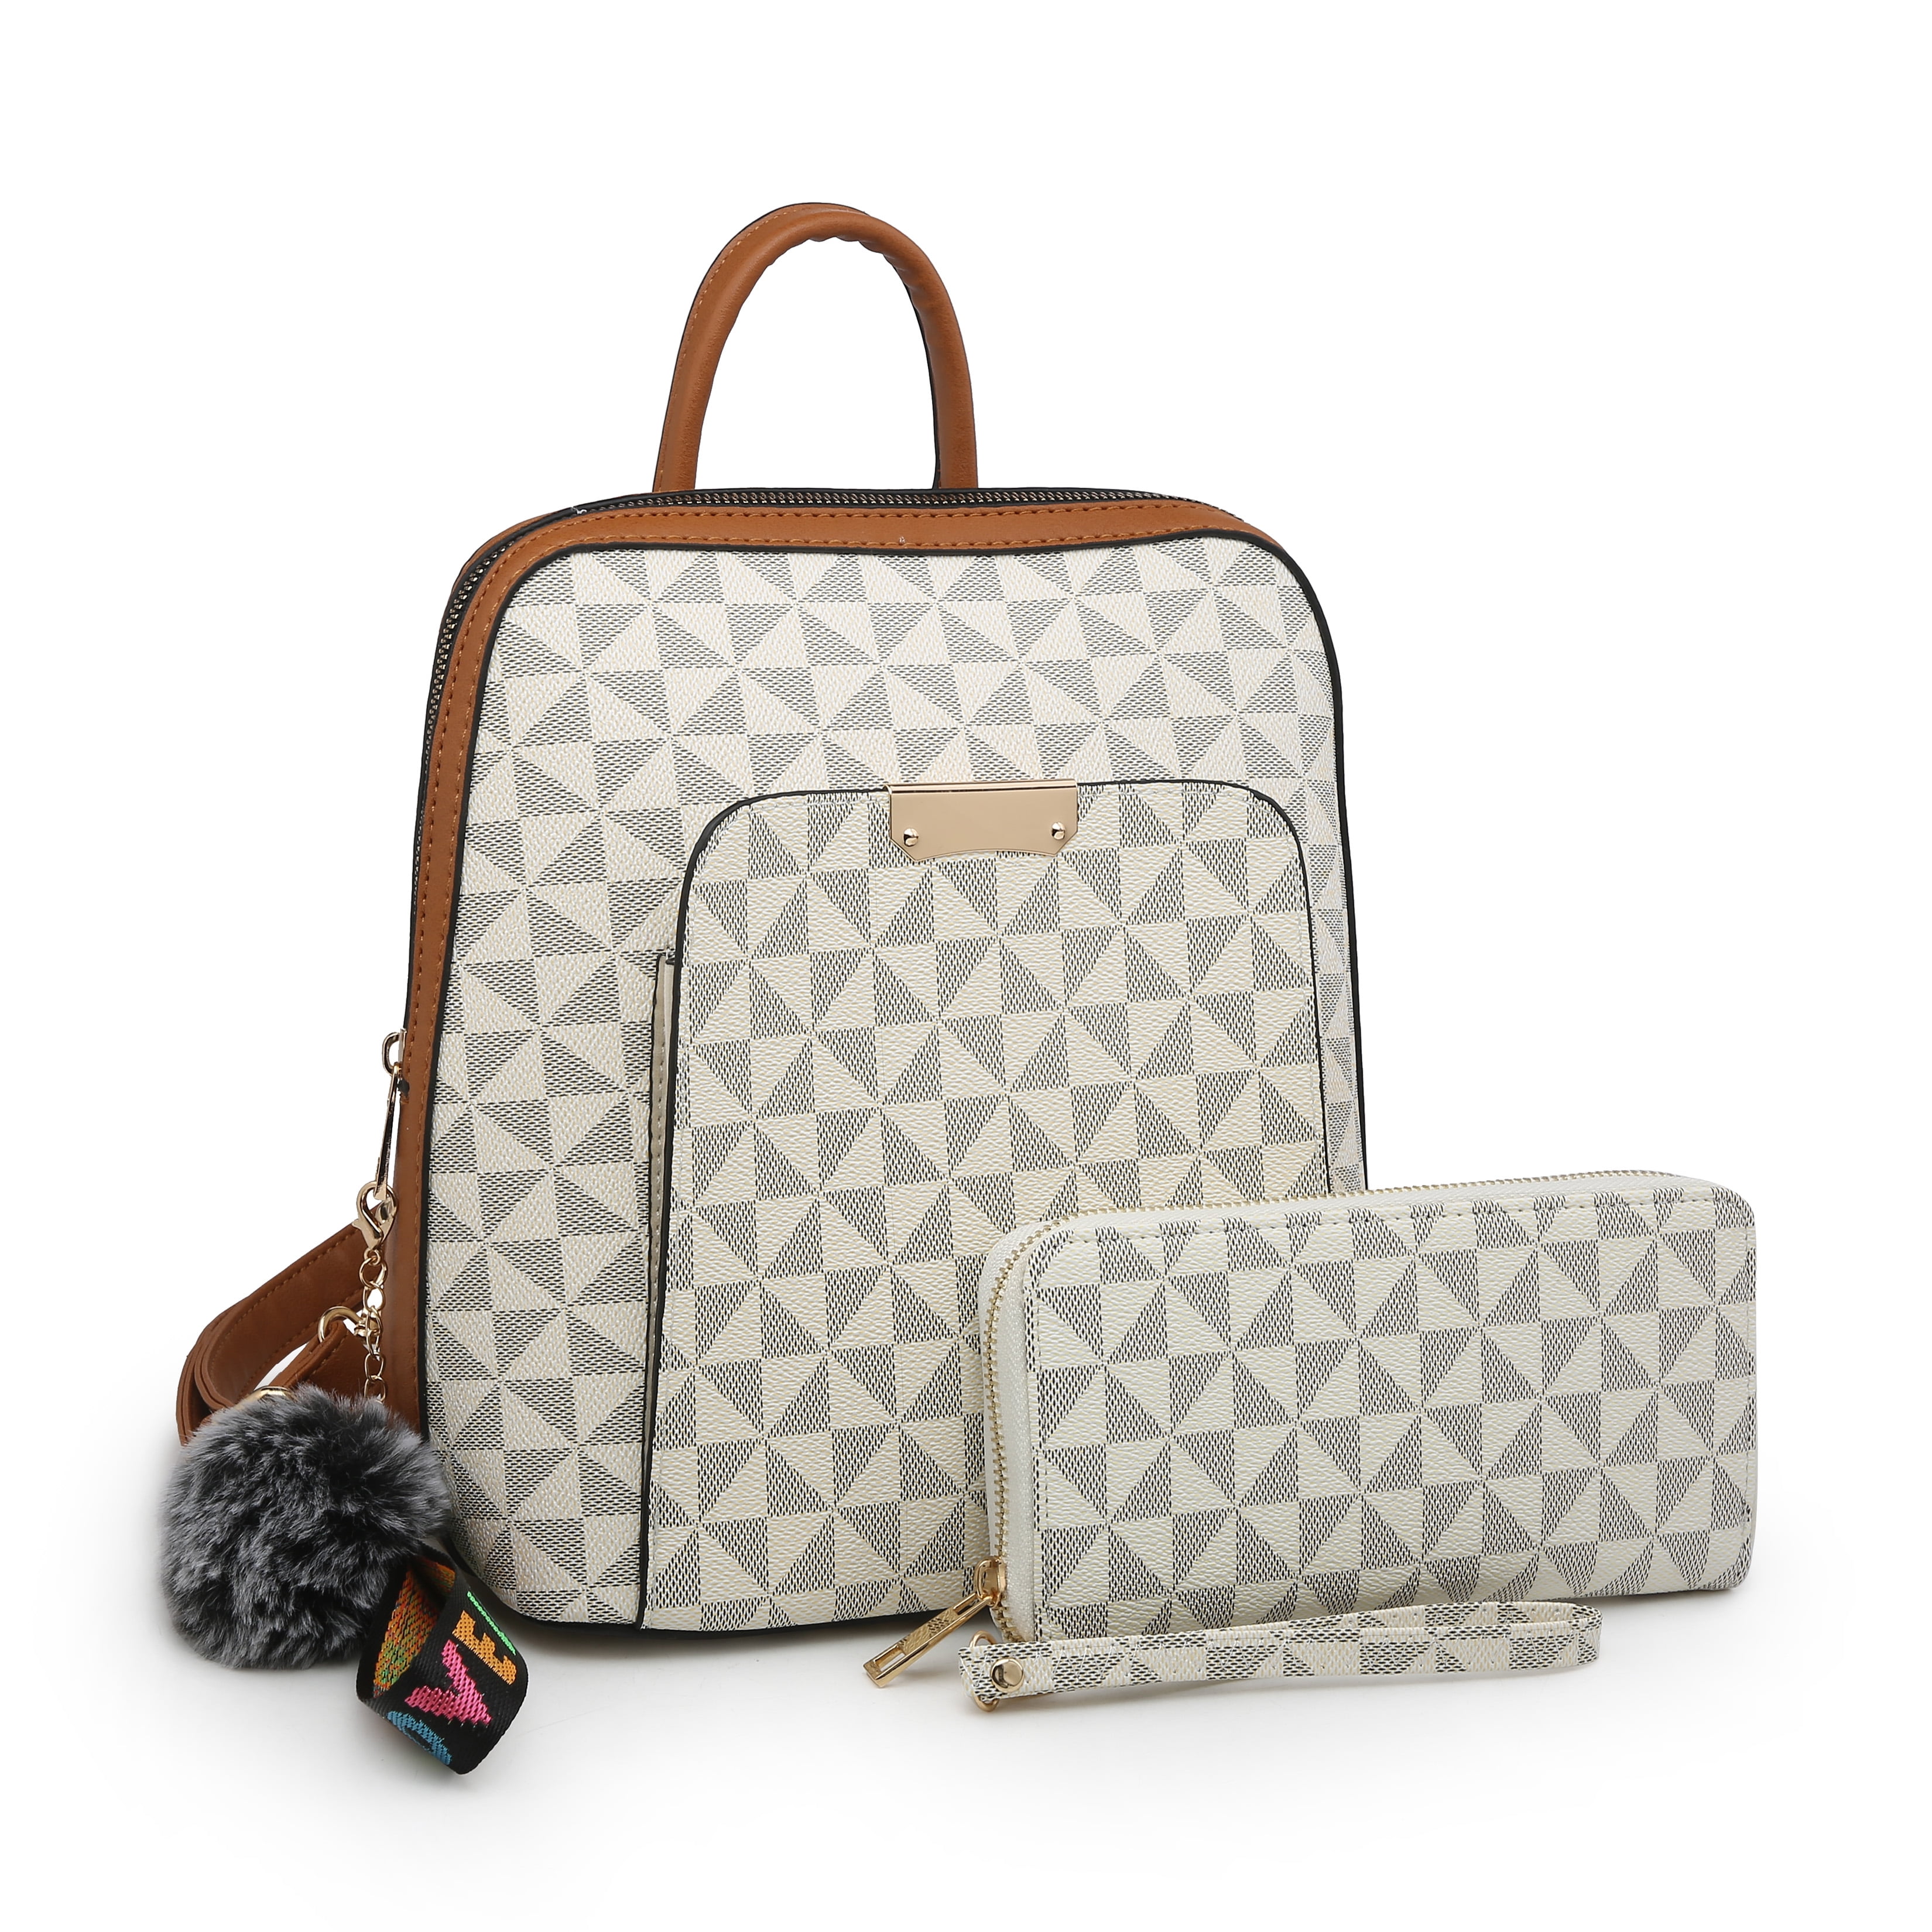 PU Leather Shoulder Bag,Space Dog Backpack,Portable Travel School Rucksack,Satchel with Top Handle